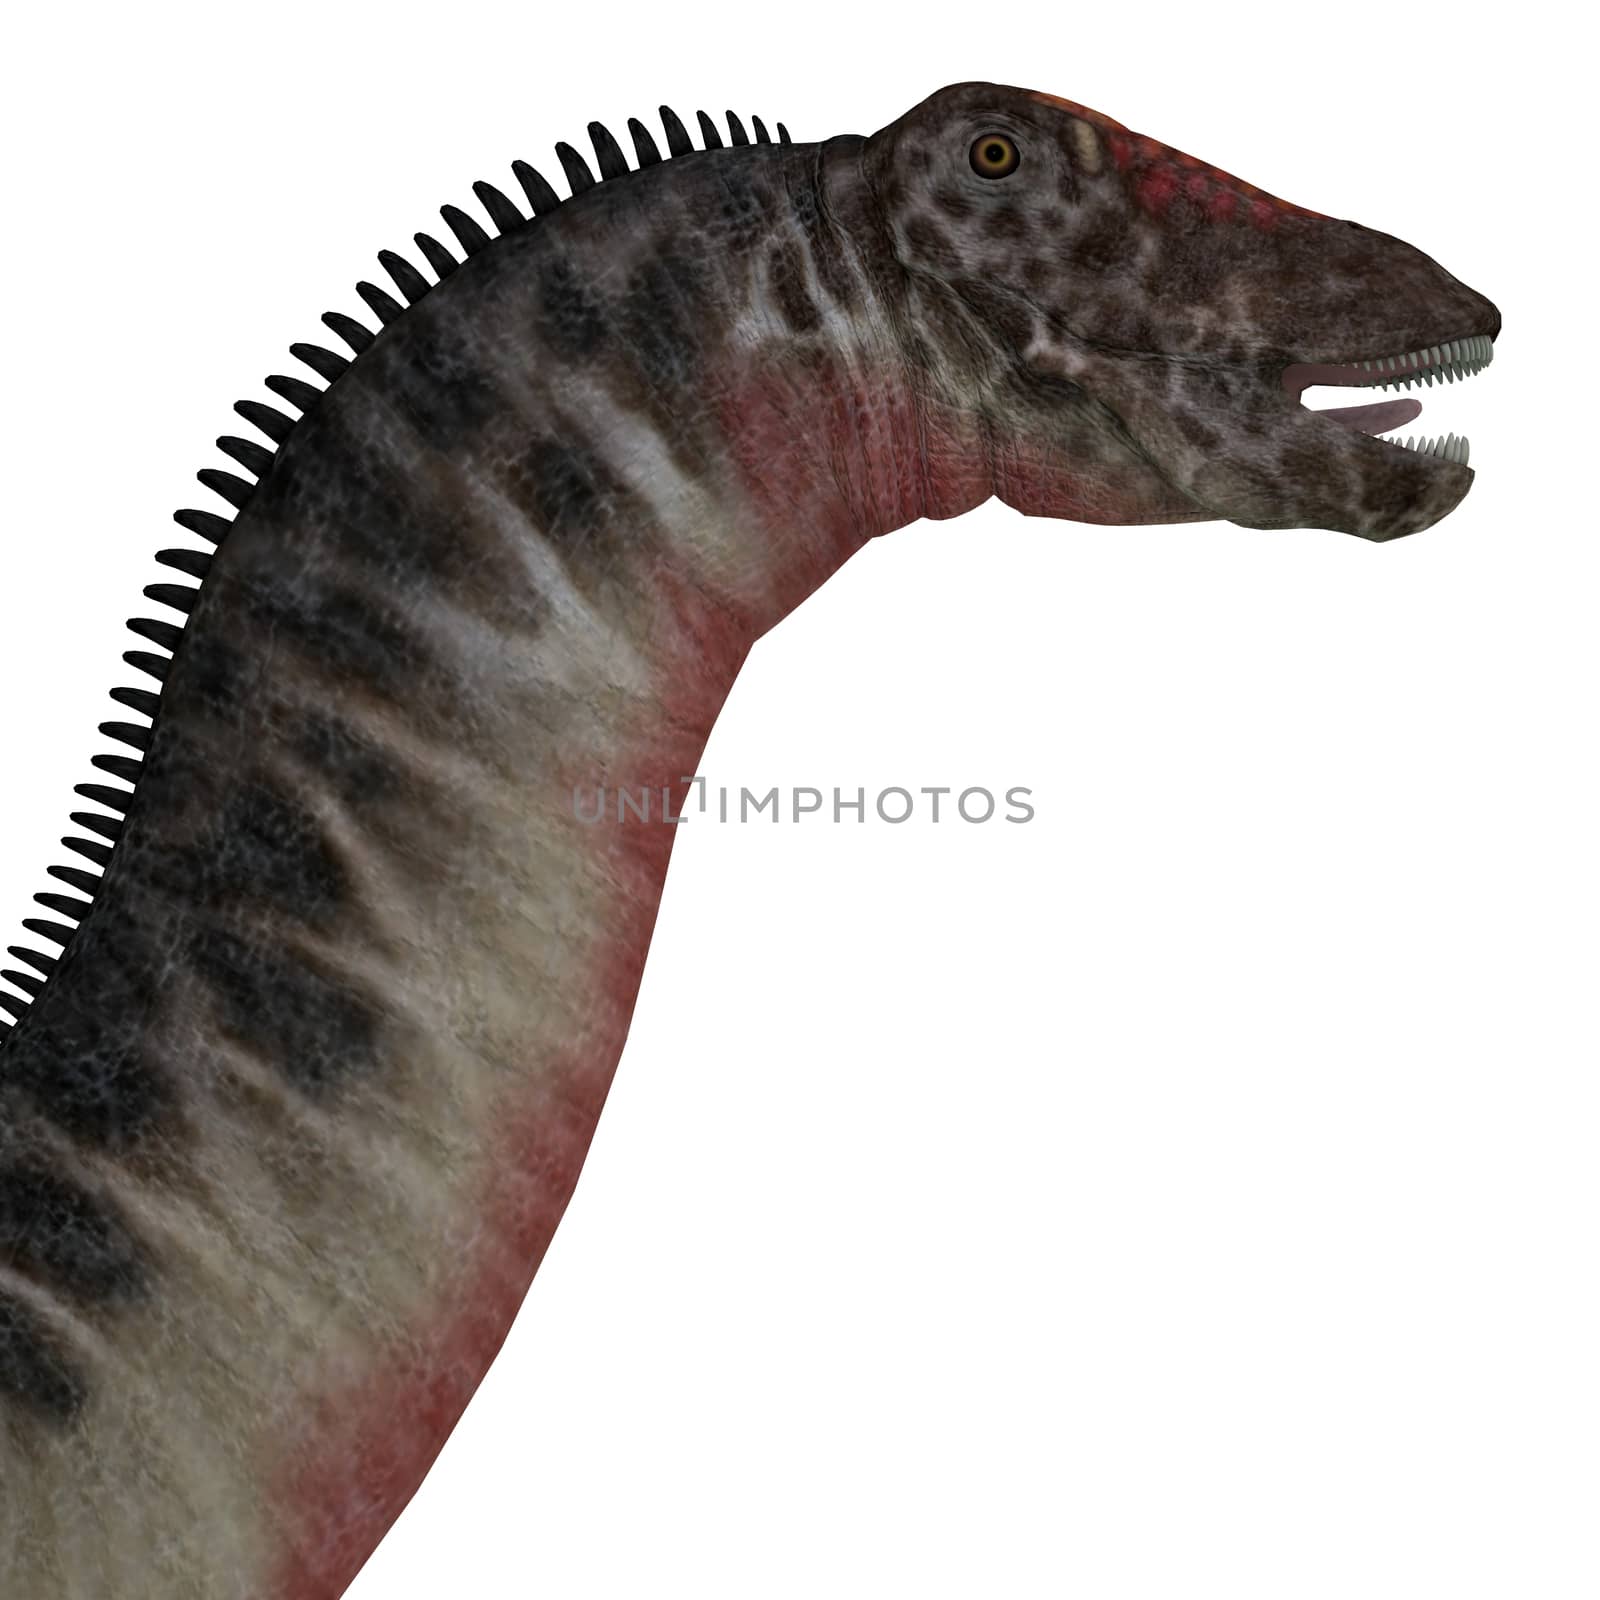 Dicraeosaurus Dinosaur Head by Catmando